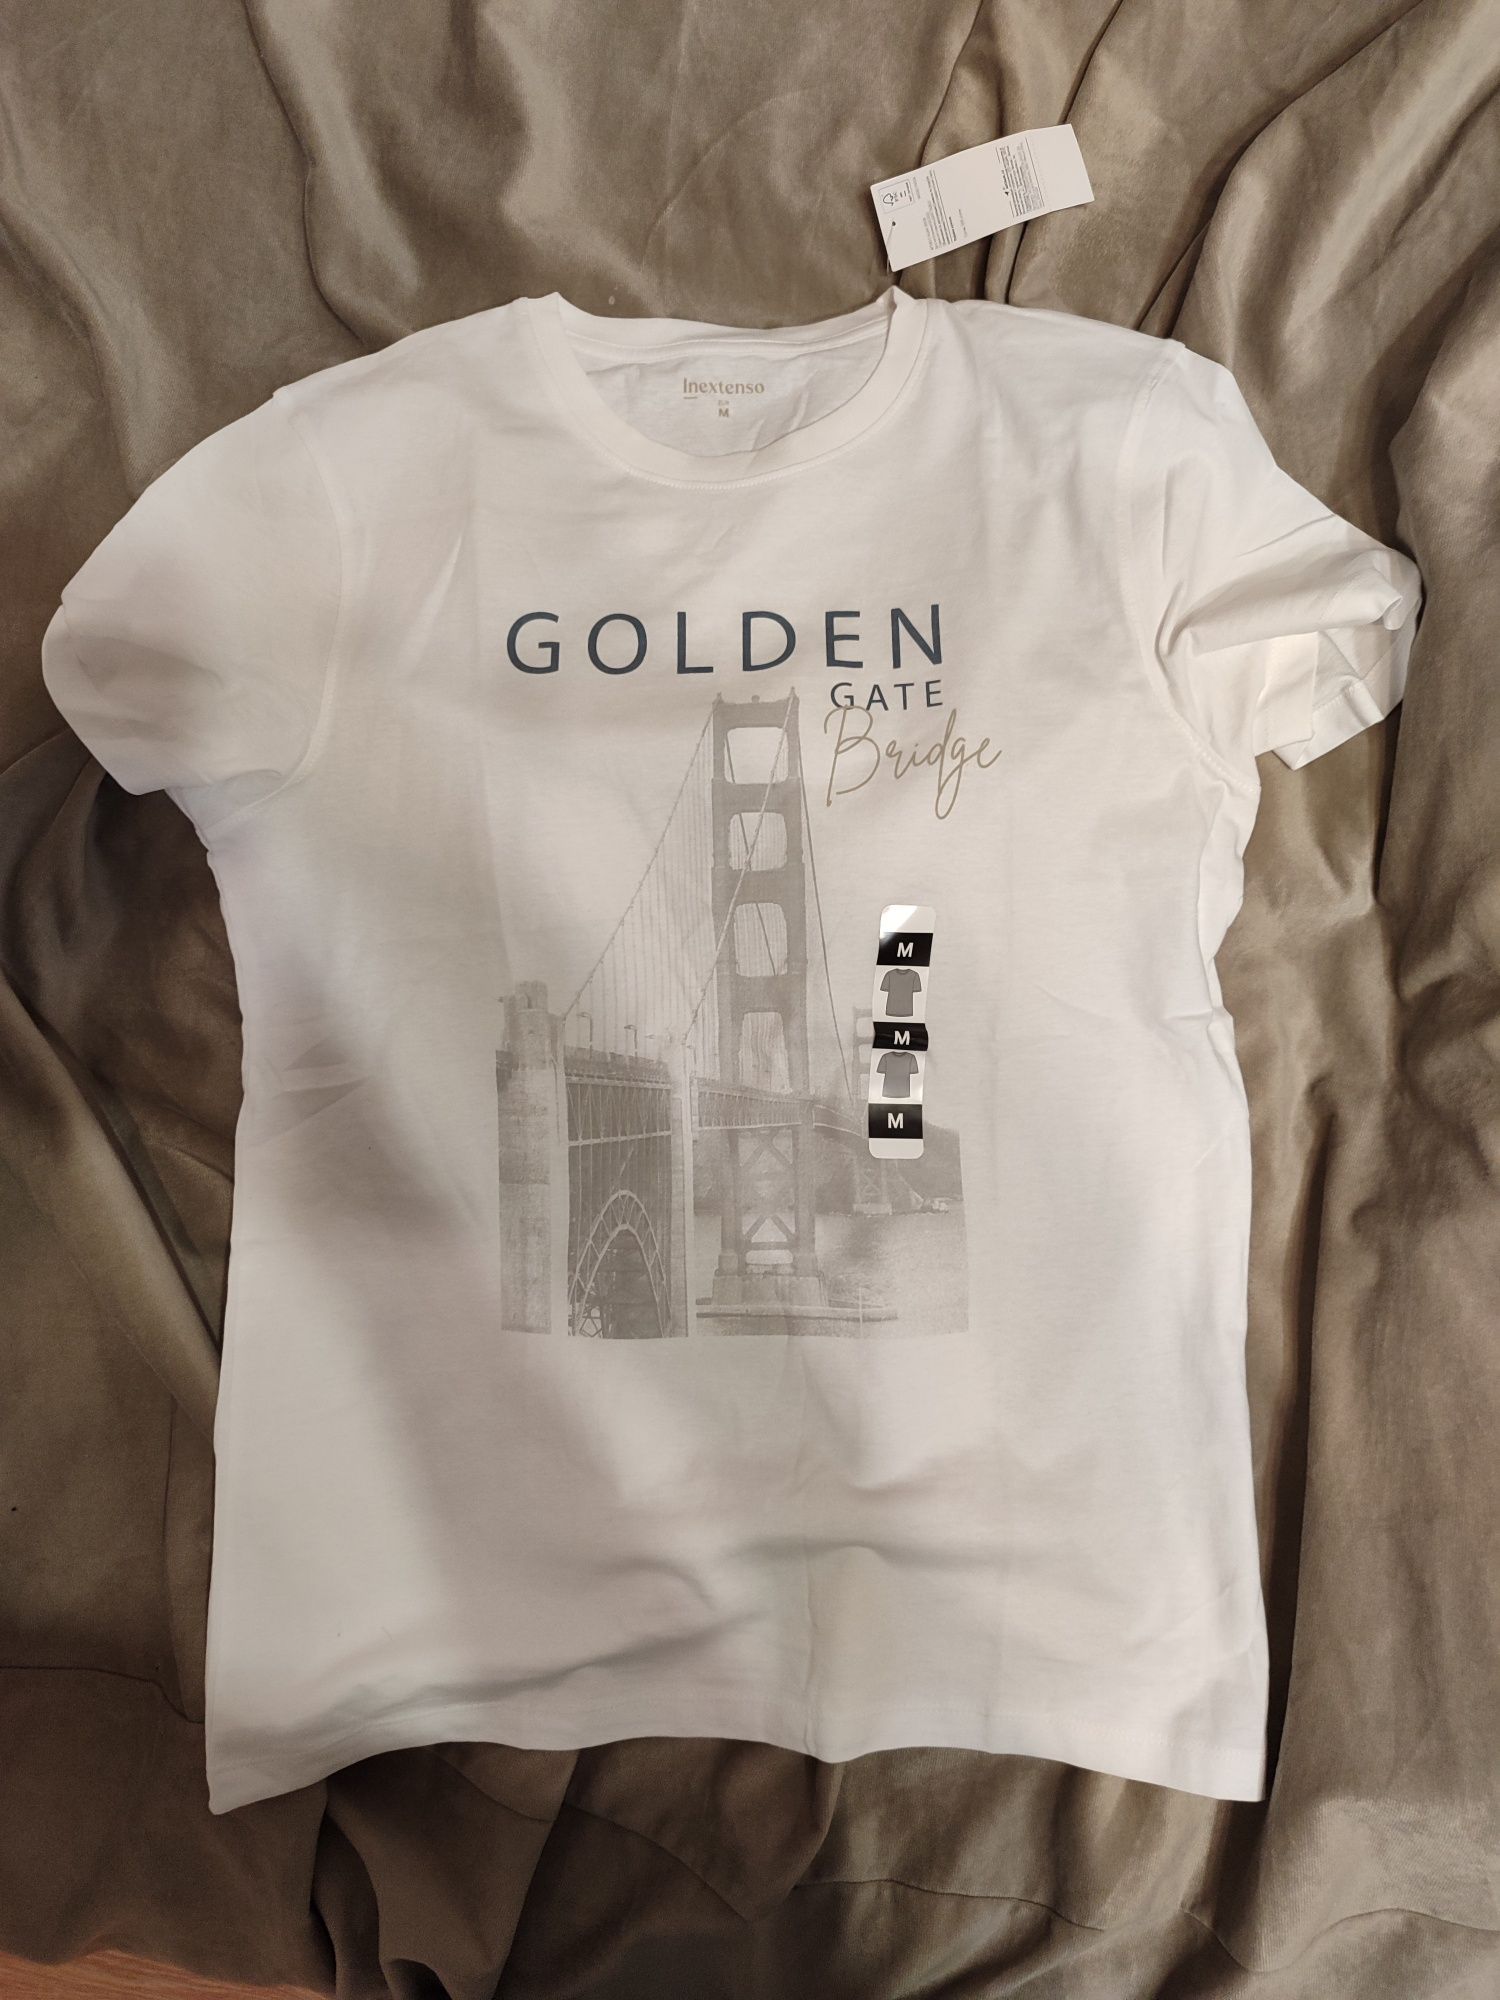 Белая футболка Inextenso, размер М, Golden Gate